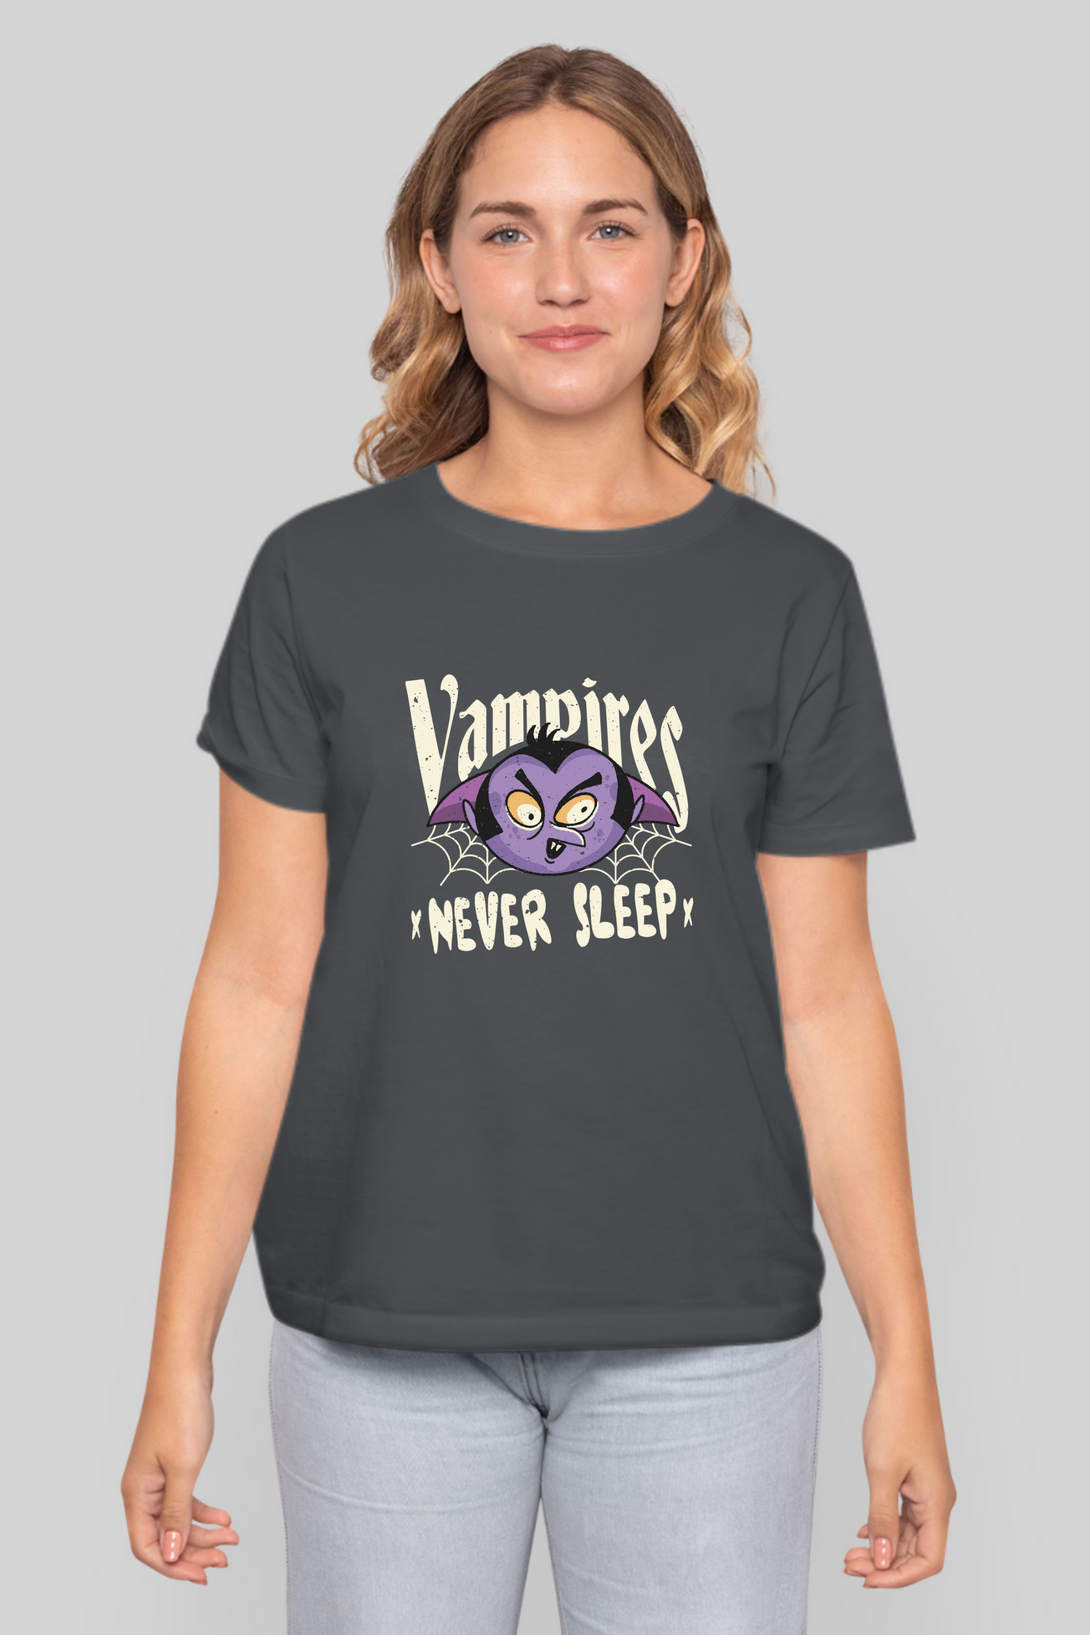 Vampires Never Sleep Printed T-Shirt For Women - WowWaves - 9